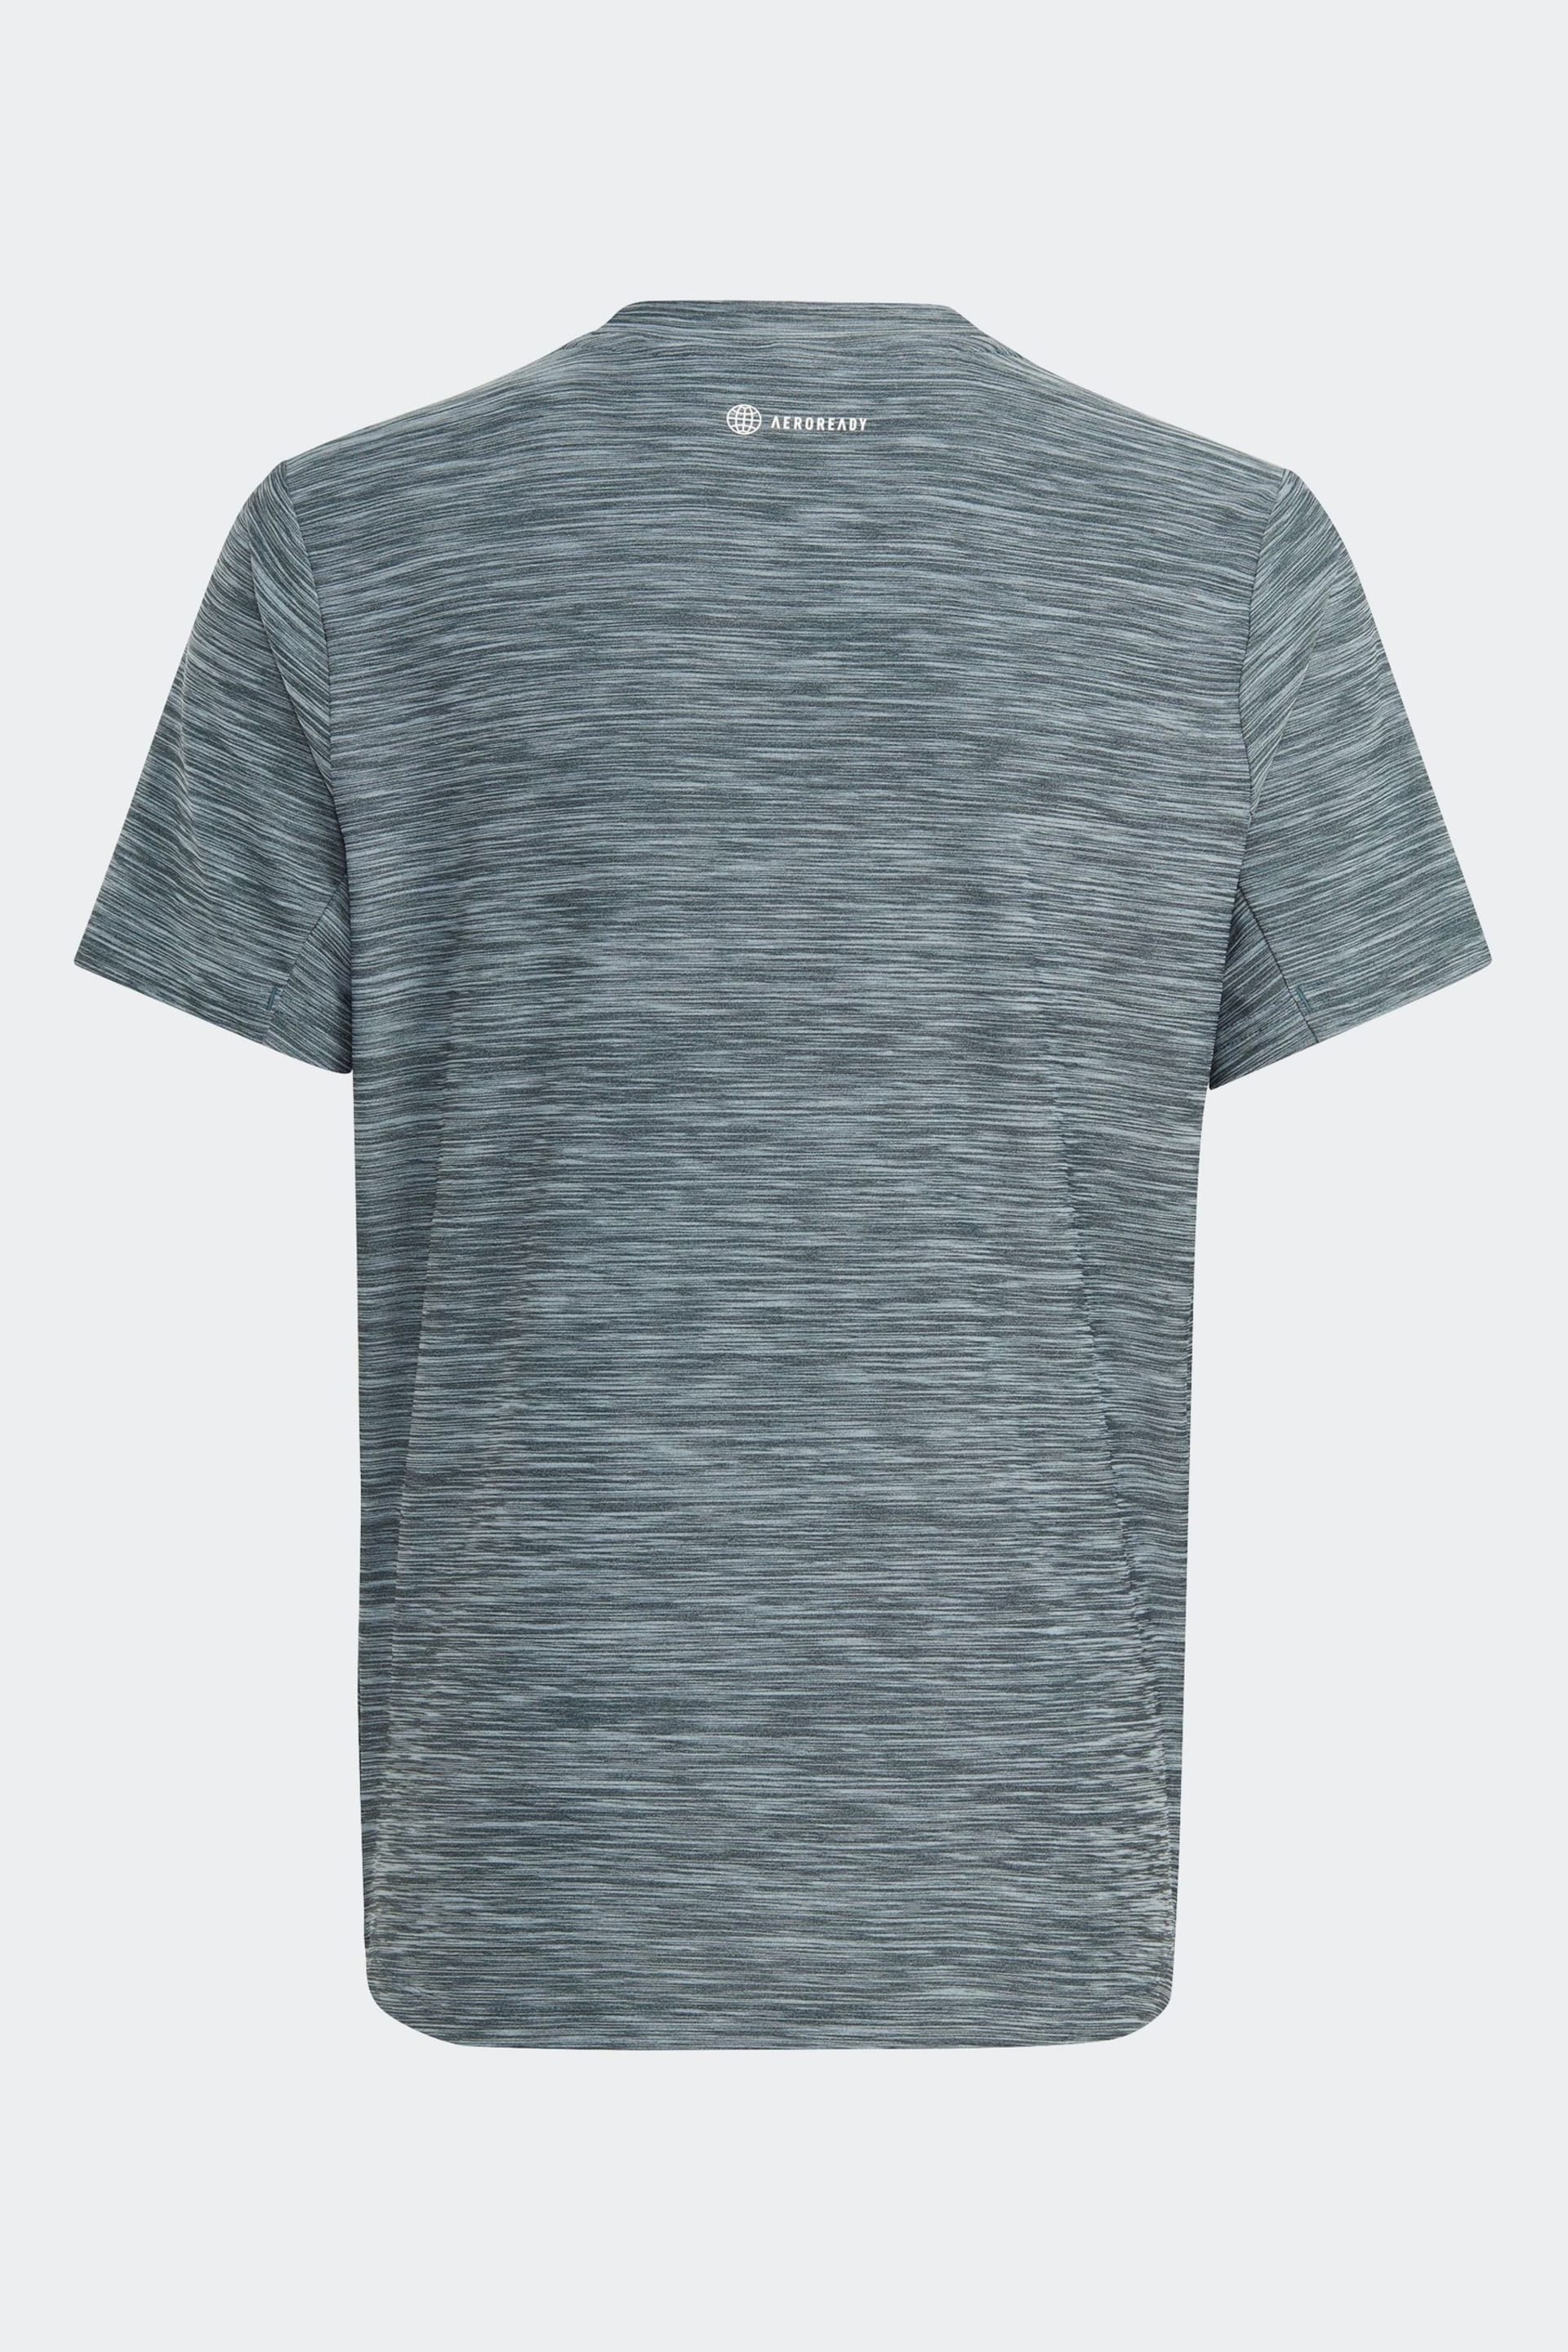 adidas Grey Sportswear Aeroready Heather T-Shirt - Image 2 of 5